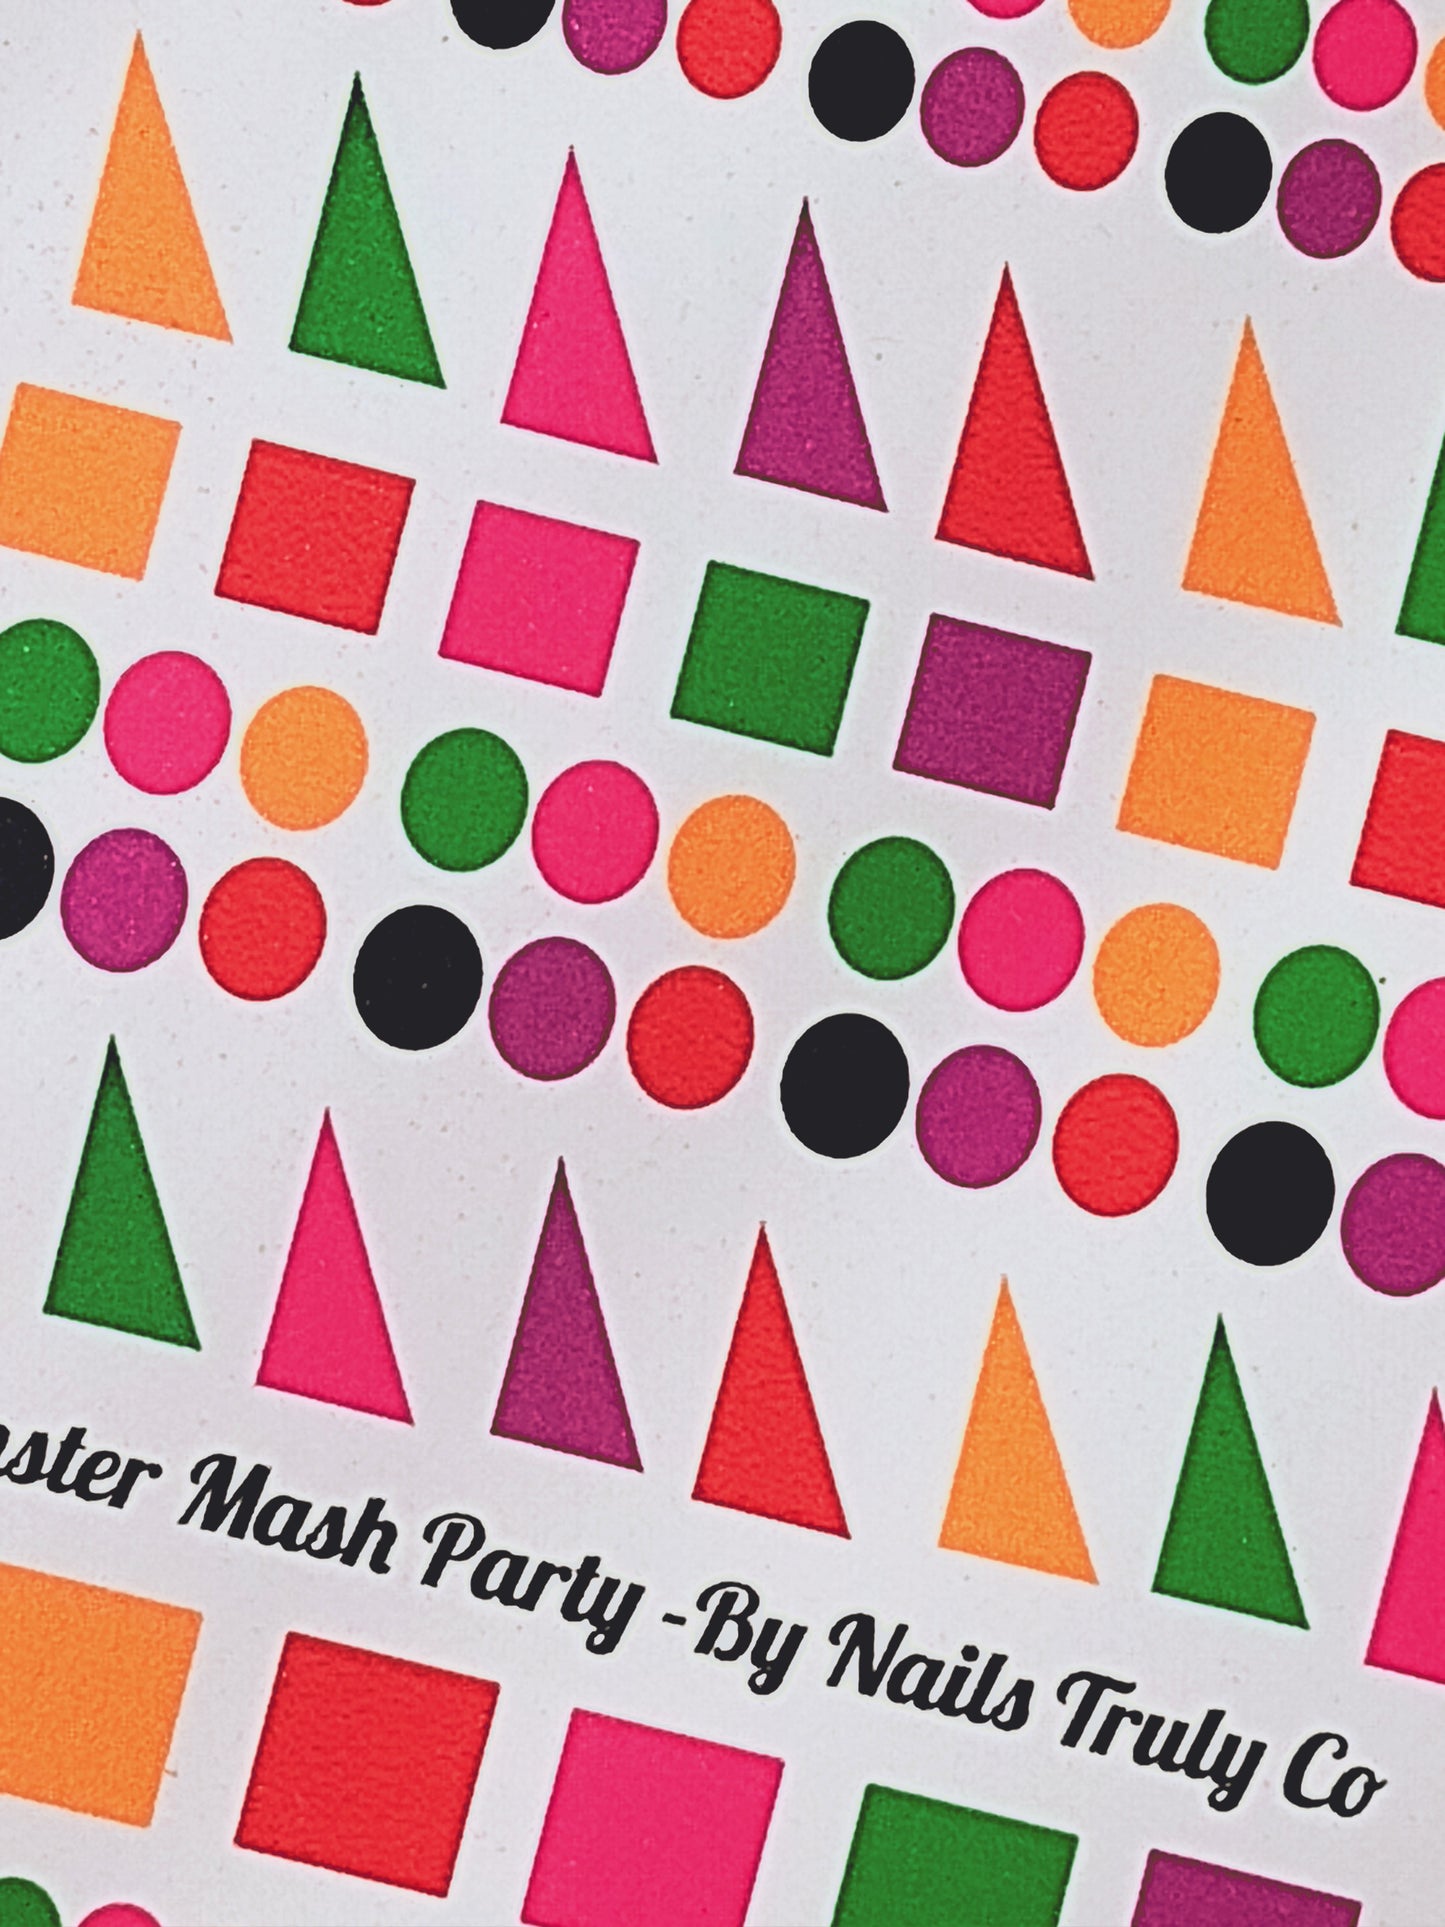 Neon Shapes Nail Art - Mallory's Monster Mash Party